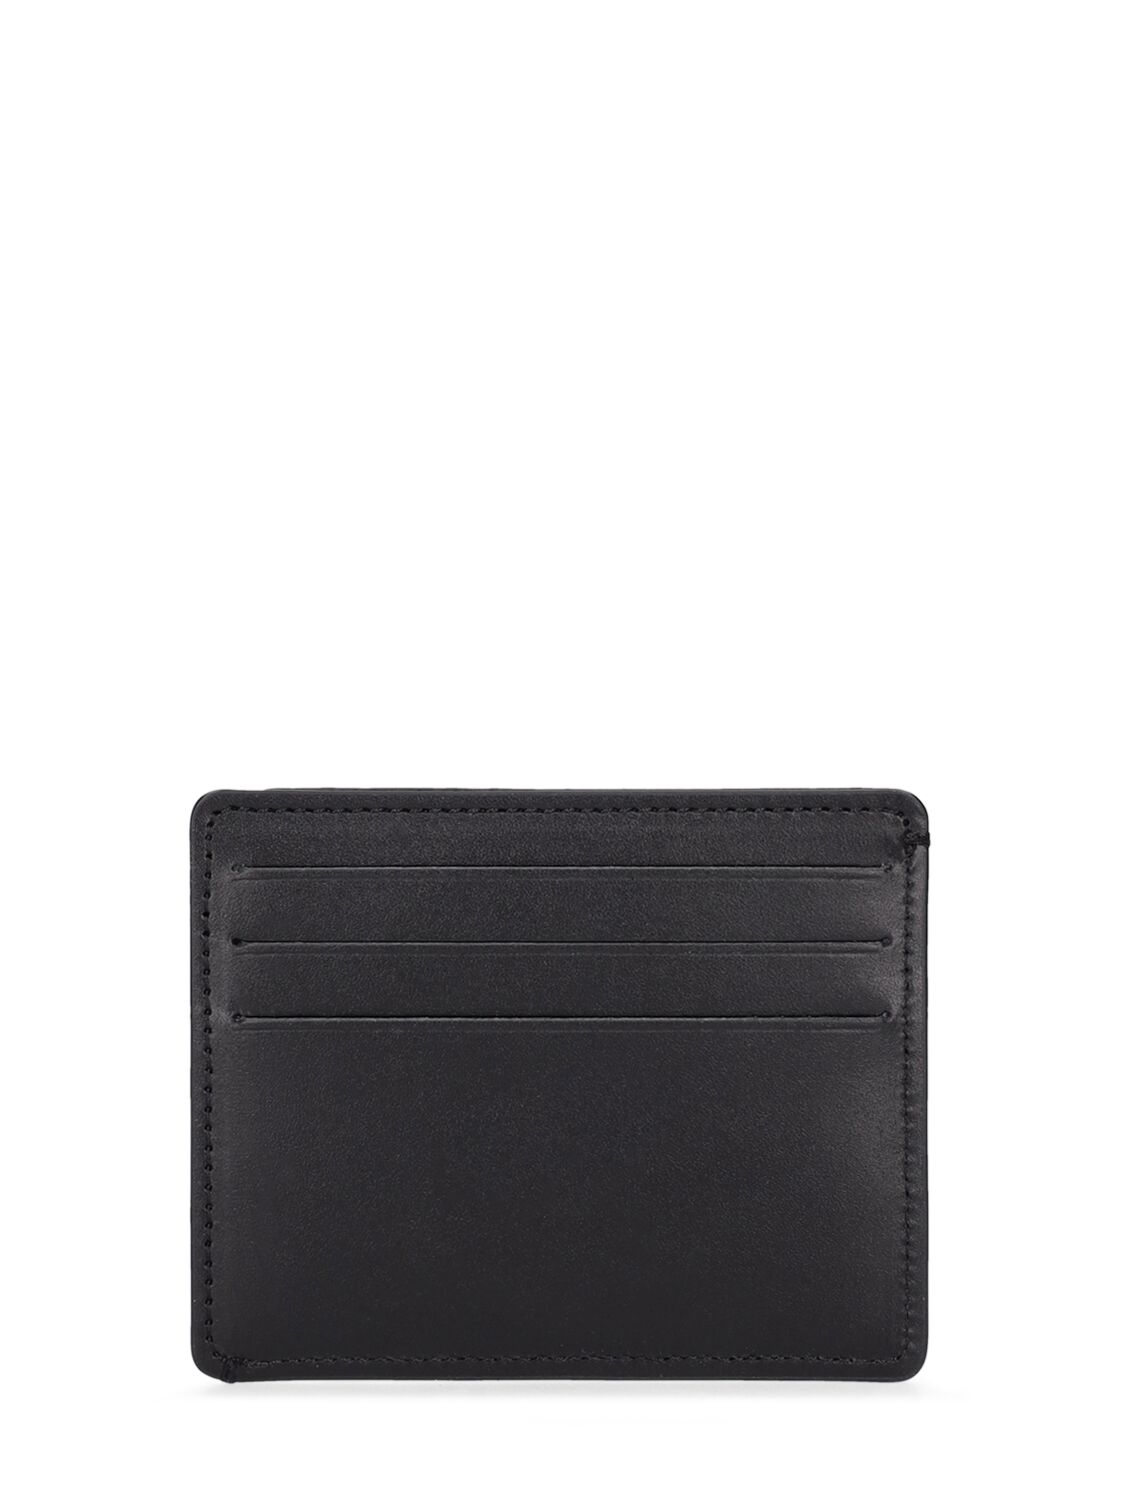 Maison Margiela Grained Leather Card Holder In Black